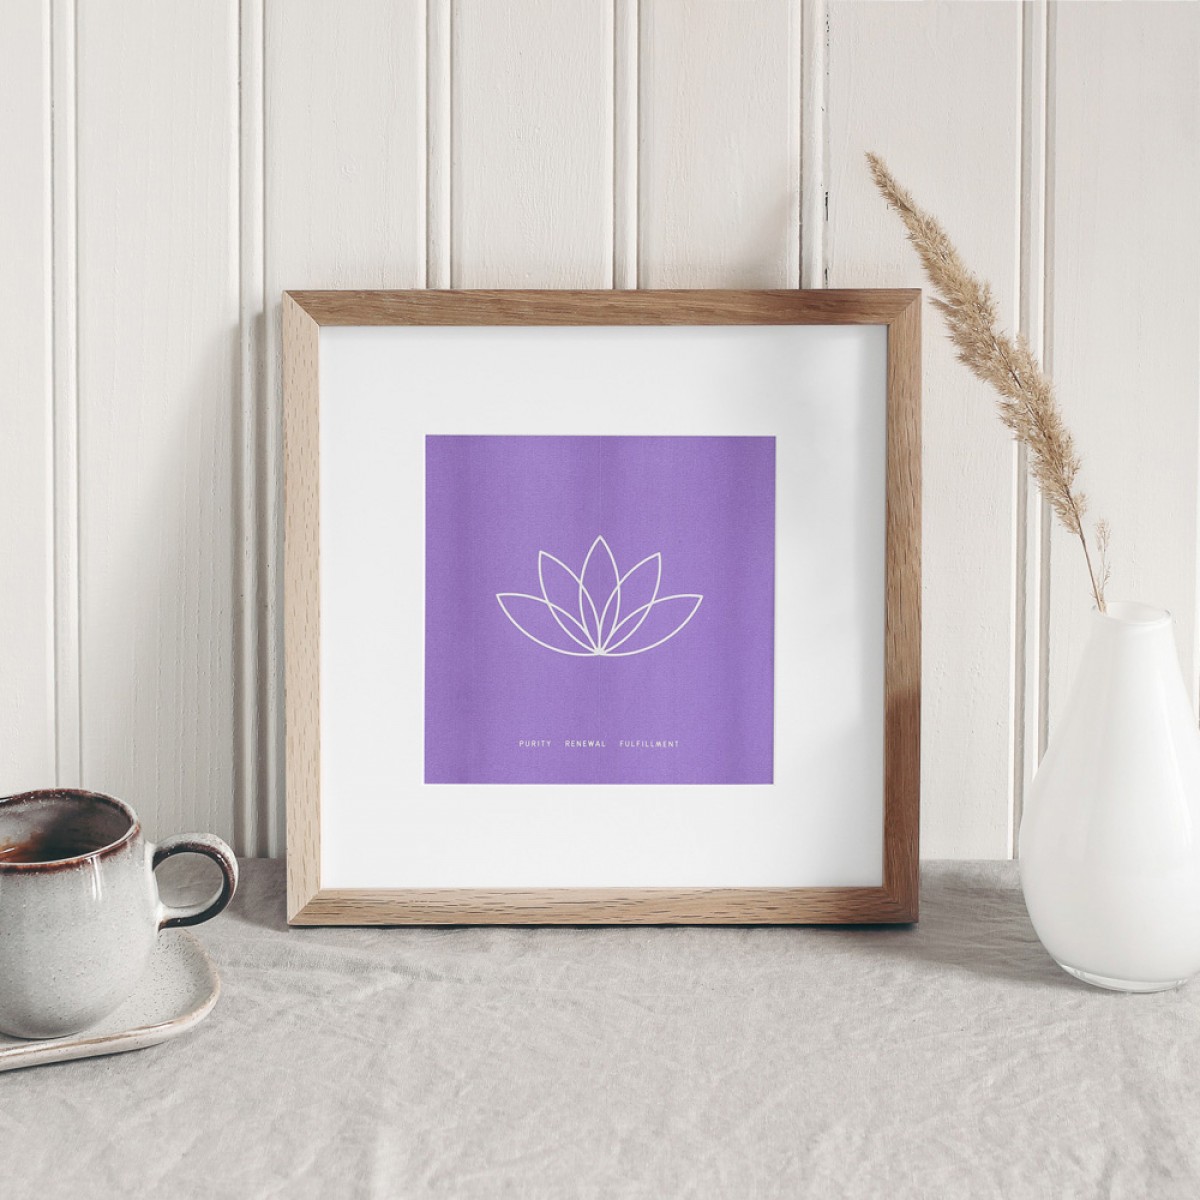 Feingeladen / SIMPLY DIVINE / Lotus Flower / Purity Renewal Fulfillment